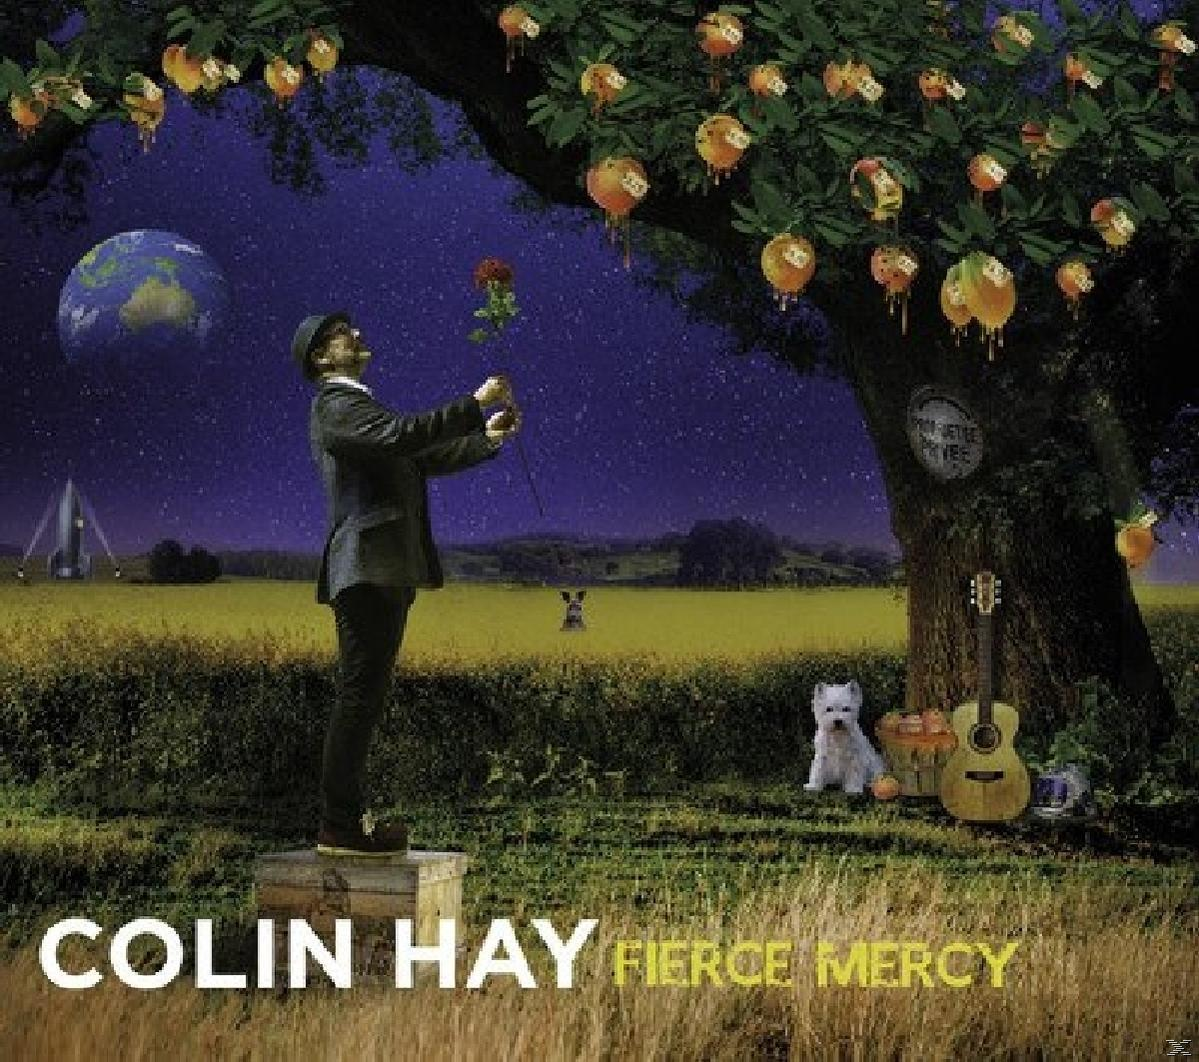 Colin Hay (CD) MERCY FIERCE - 